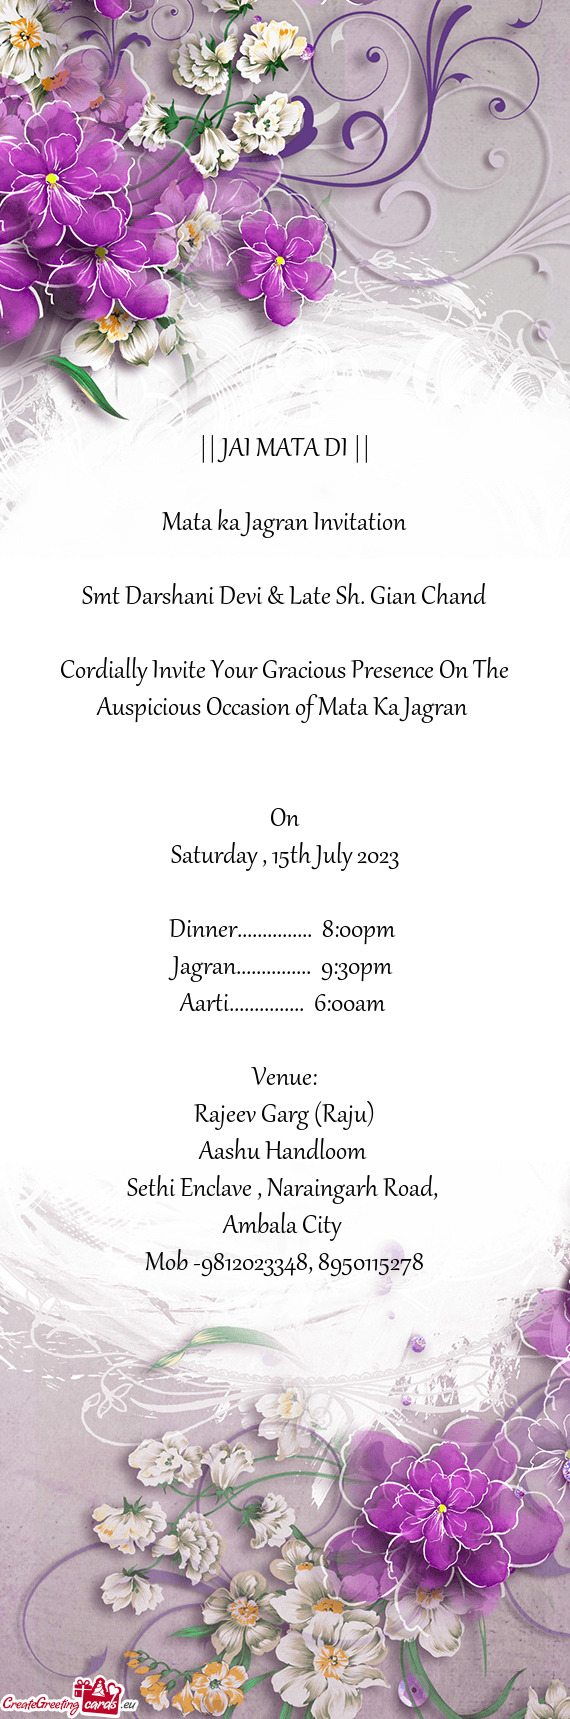 Smt Darshani Devi & Late Sh. Gian Chand